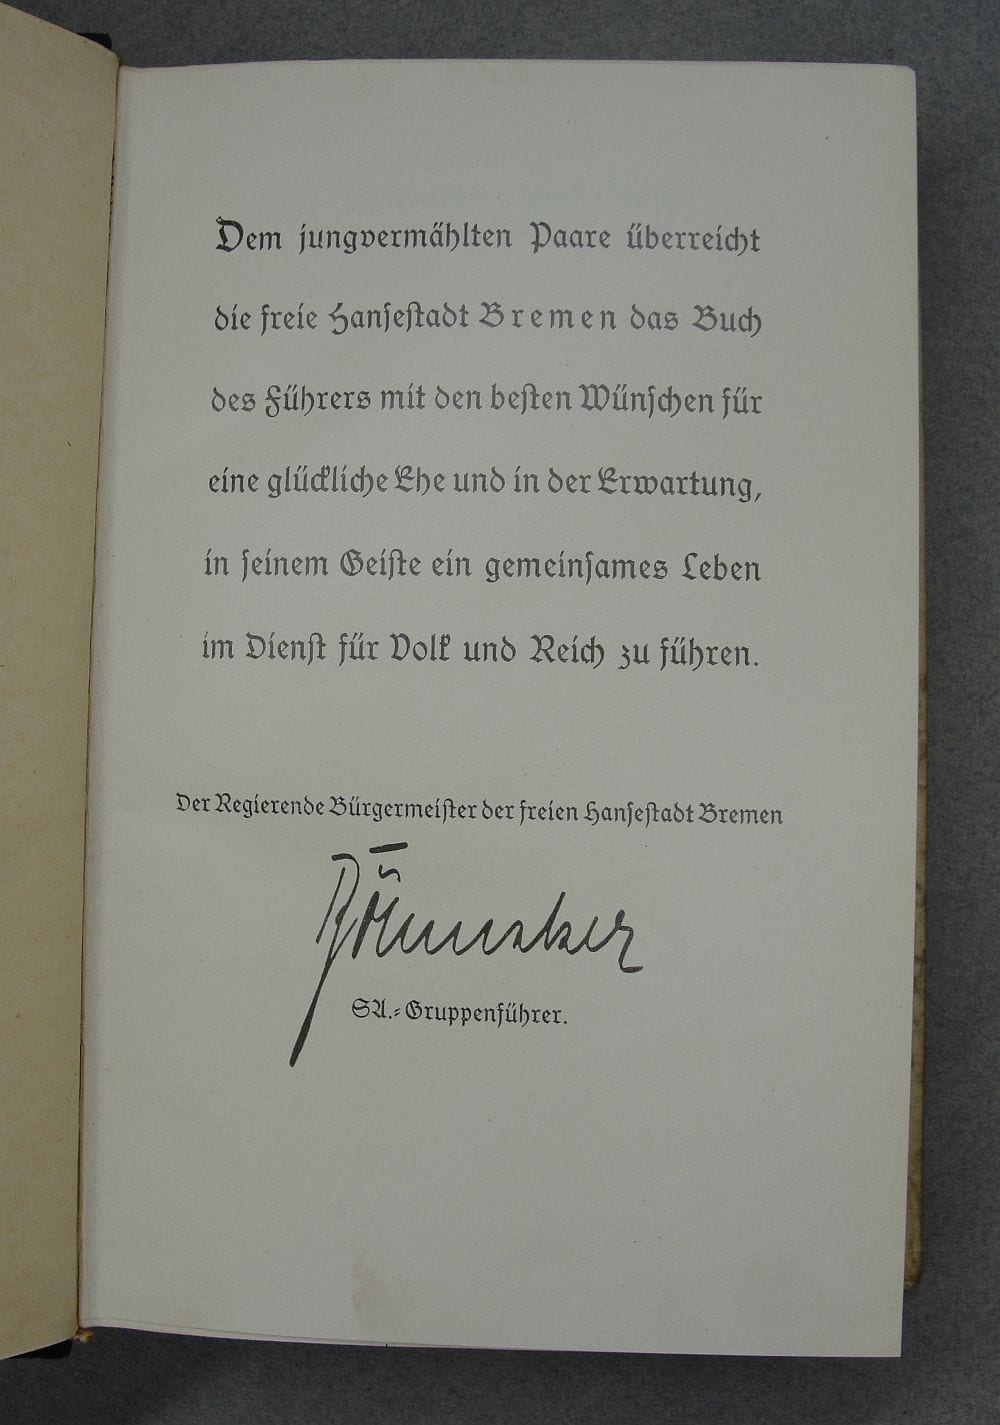 "Mein Kampf" 1938 Presentation Edition